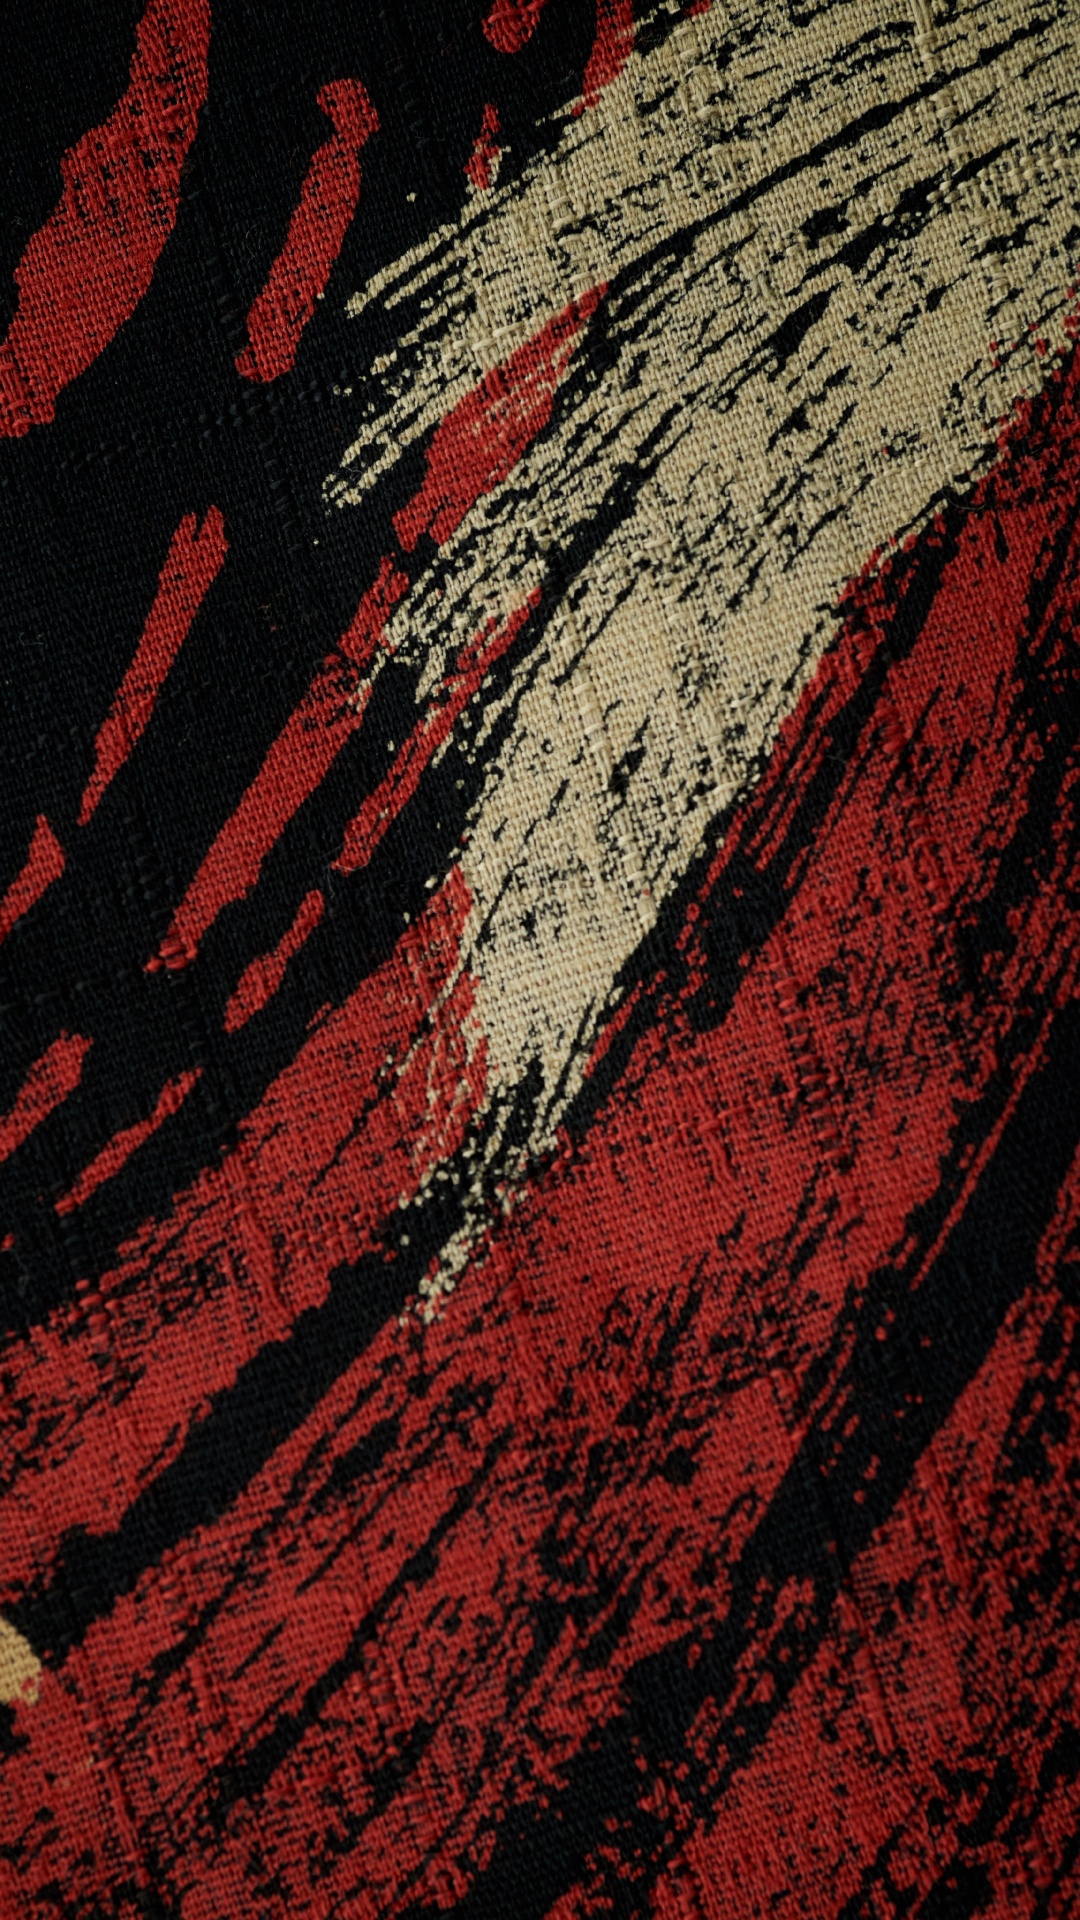 Textil Rojo Blanco y Negro. Wallpaper in 1080x1920 Resolution